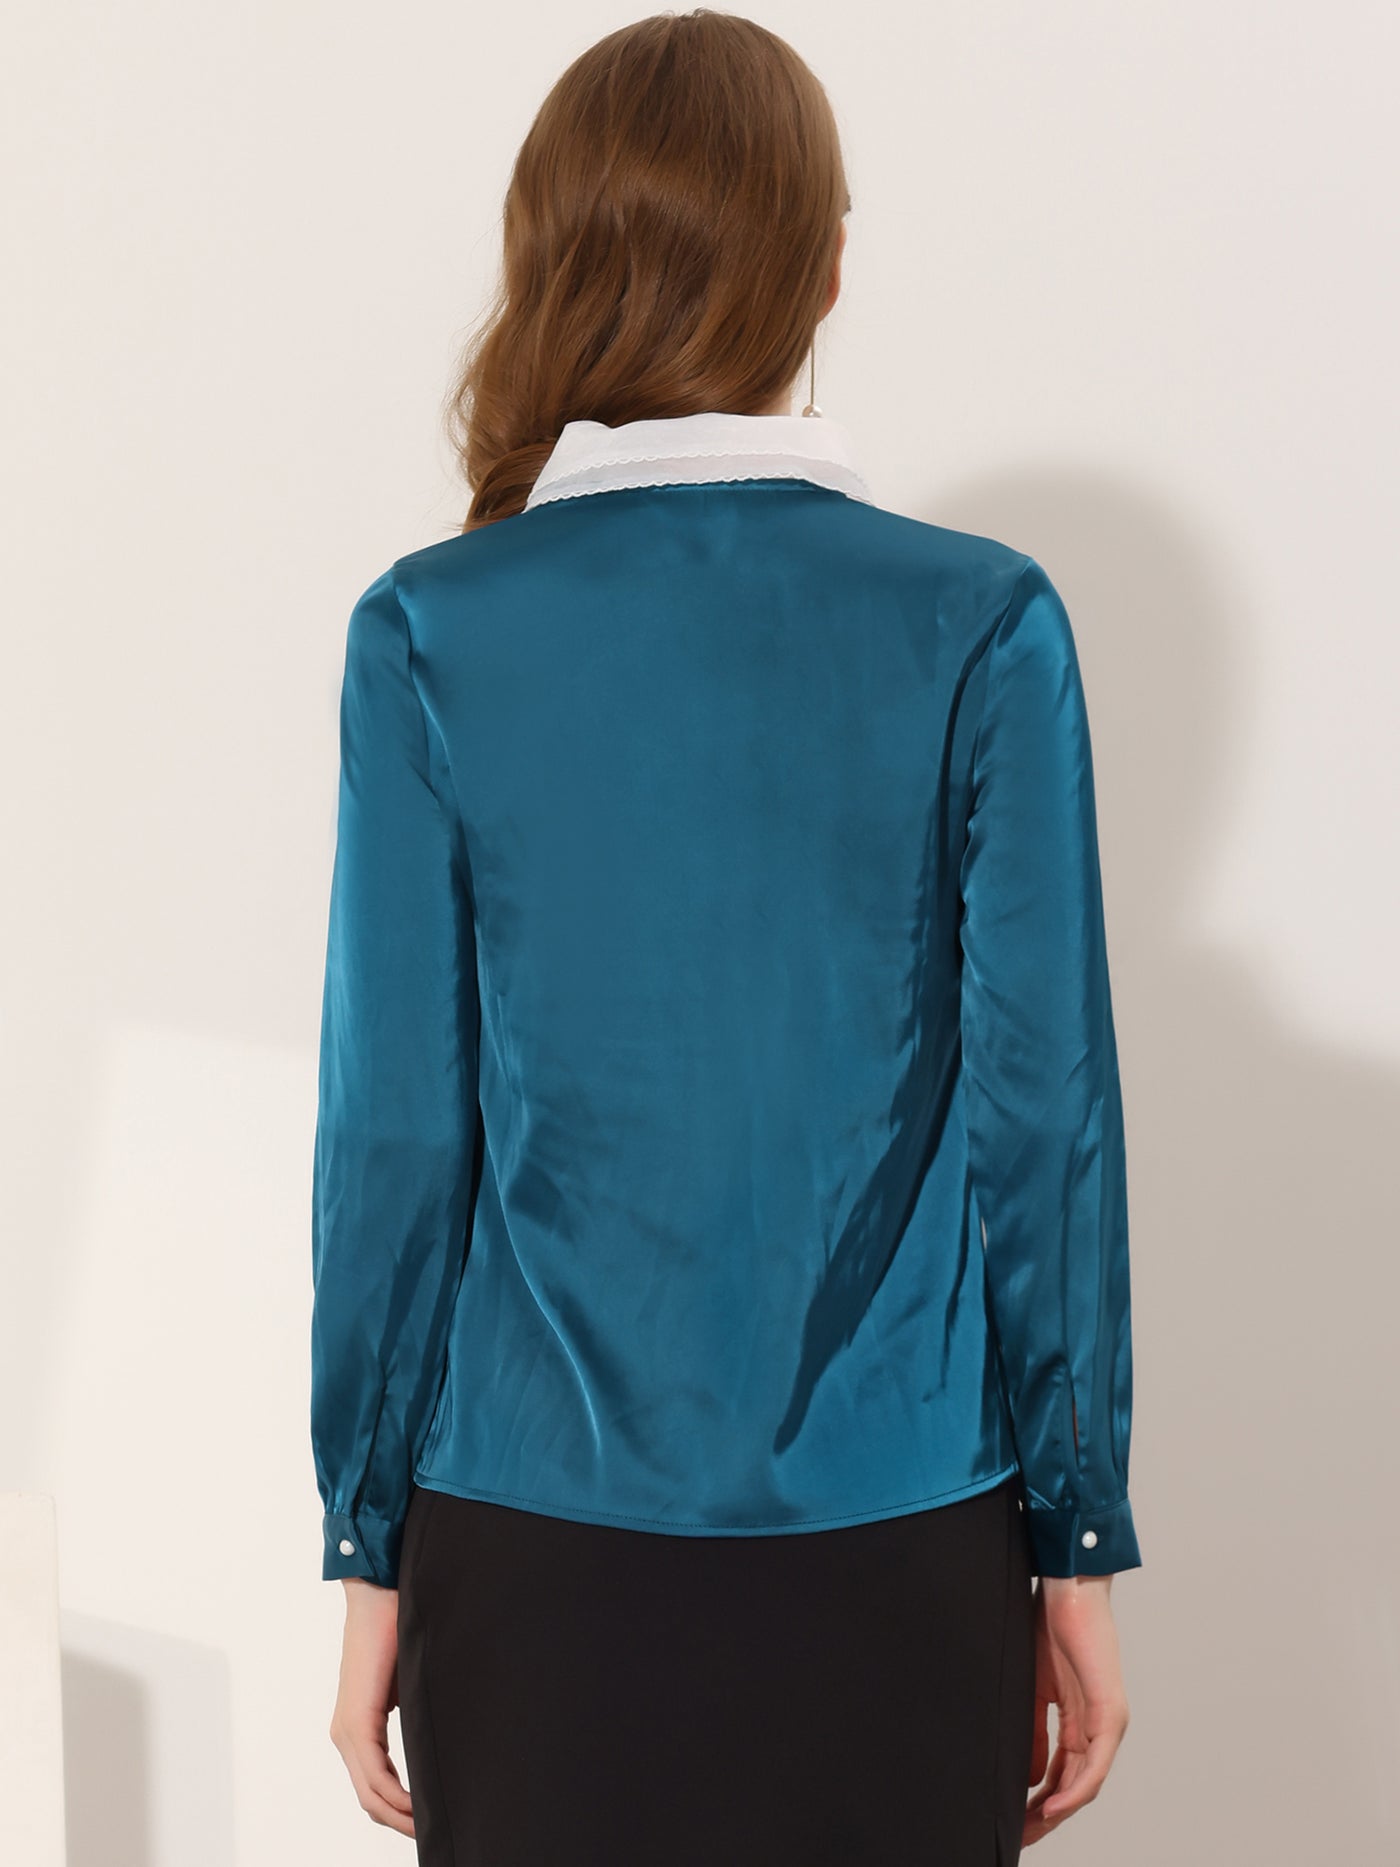 Allegra K Double Collar Shirt Elegant Long Sleeve Satin Buttons Blouse Top